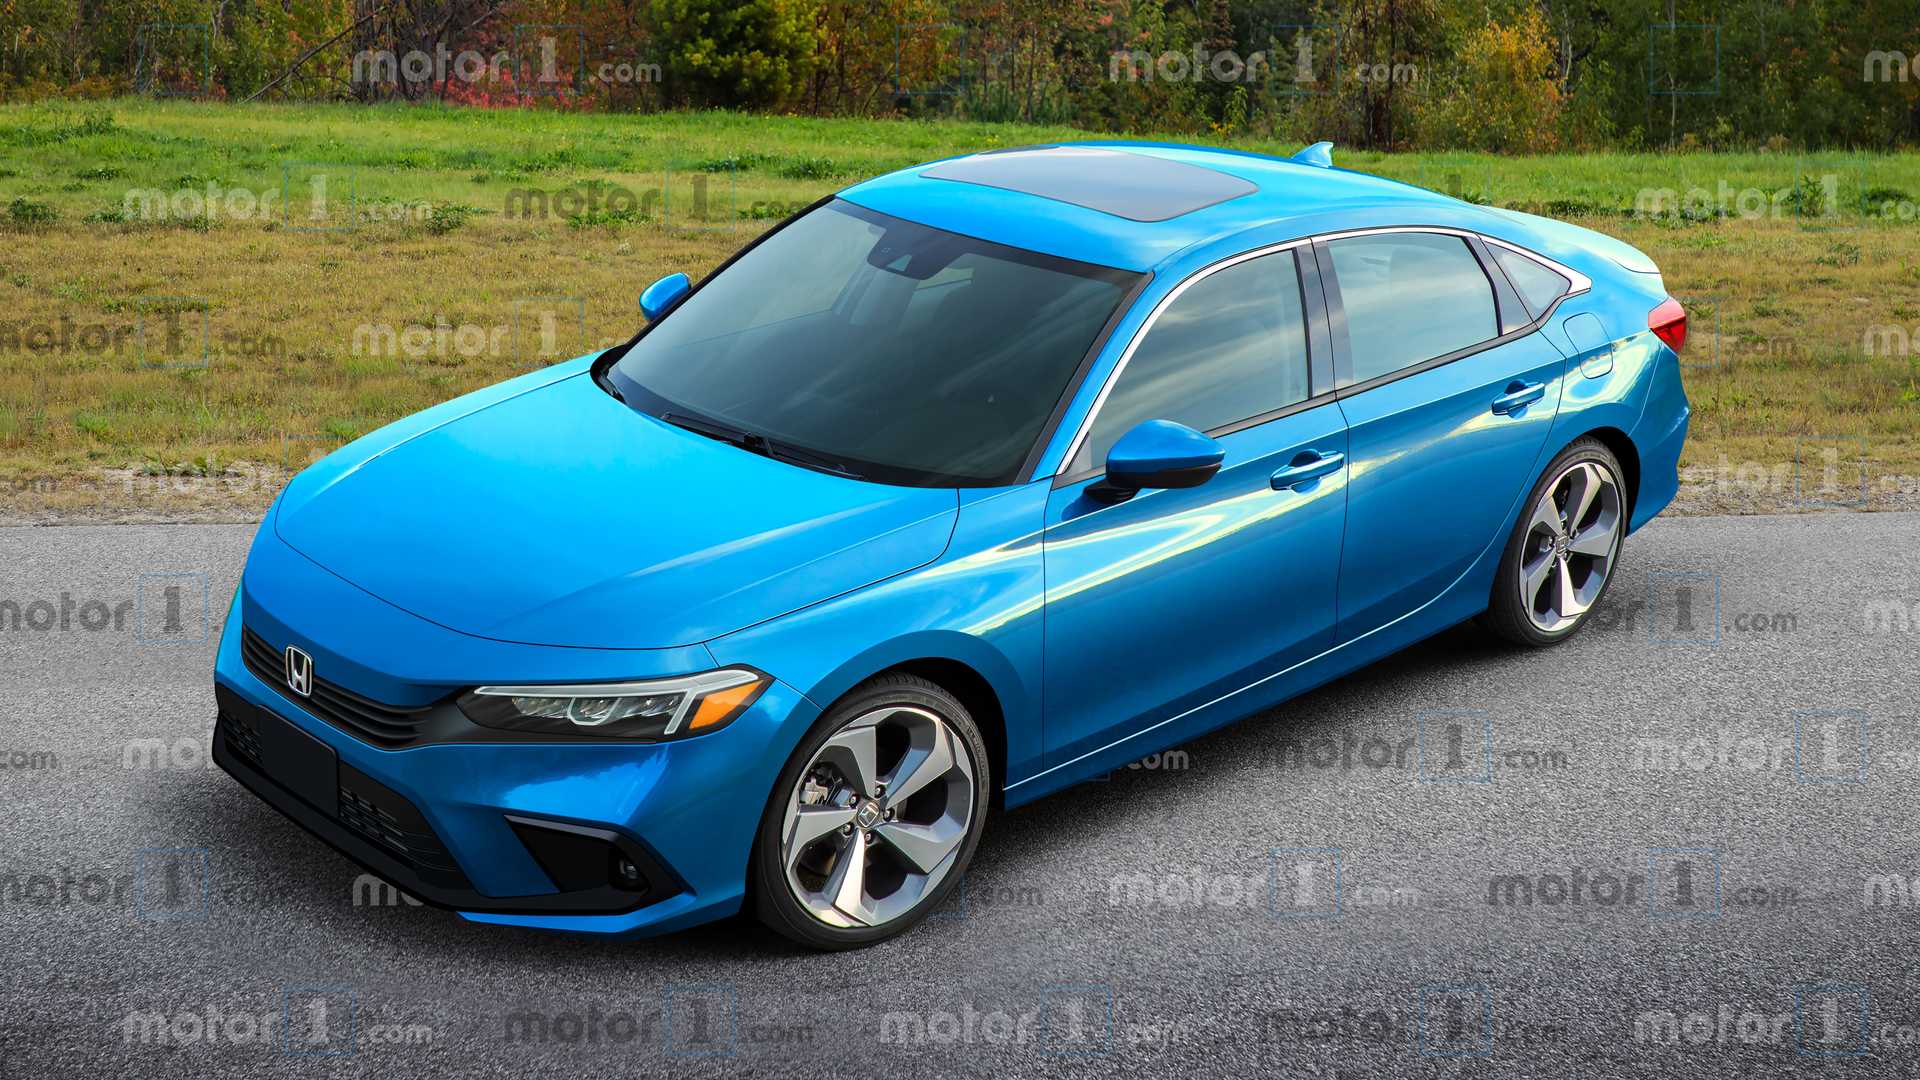 2022 Honda Civic Sedan: Here's What It Could Look Like ...